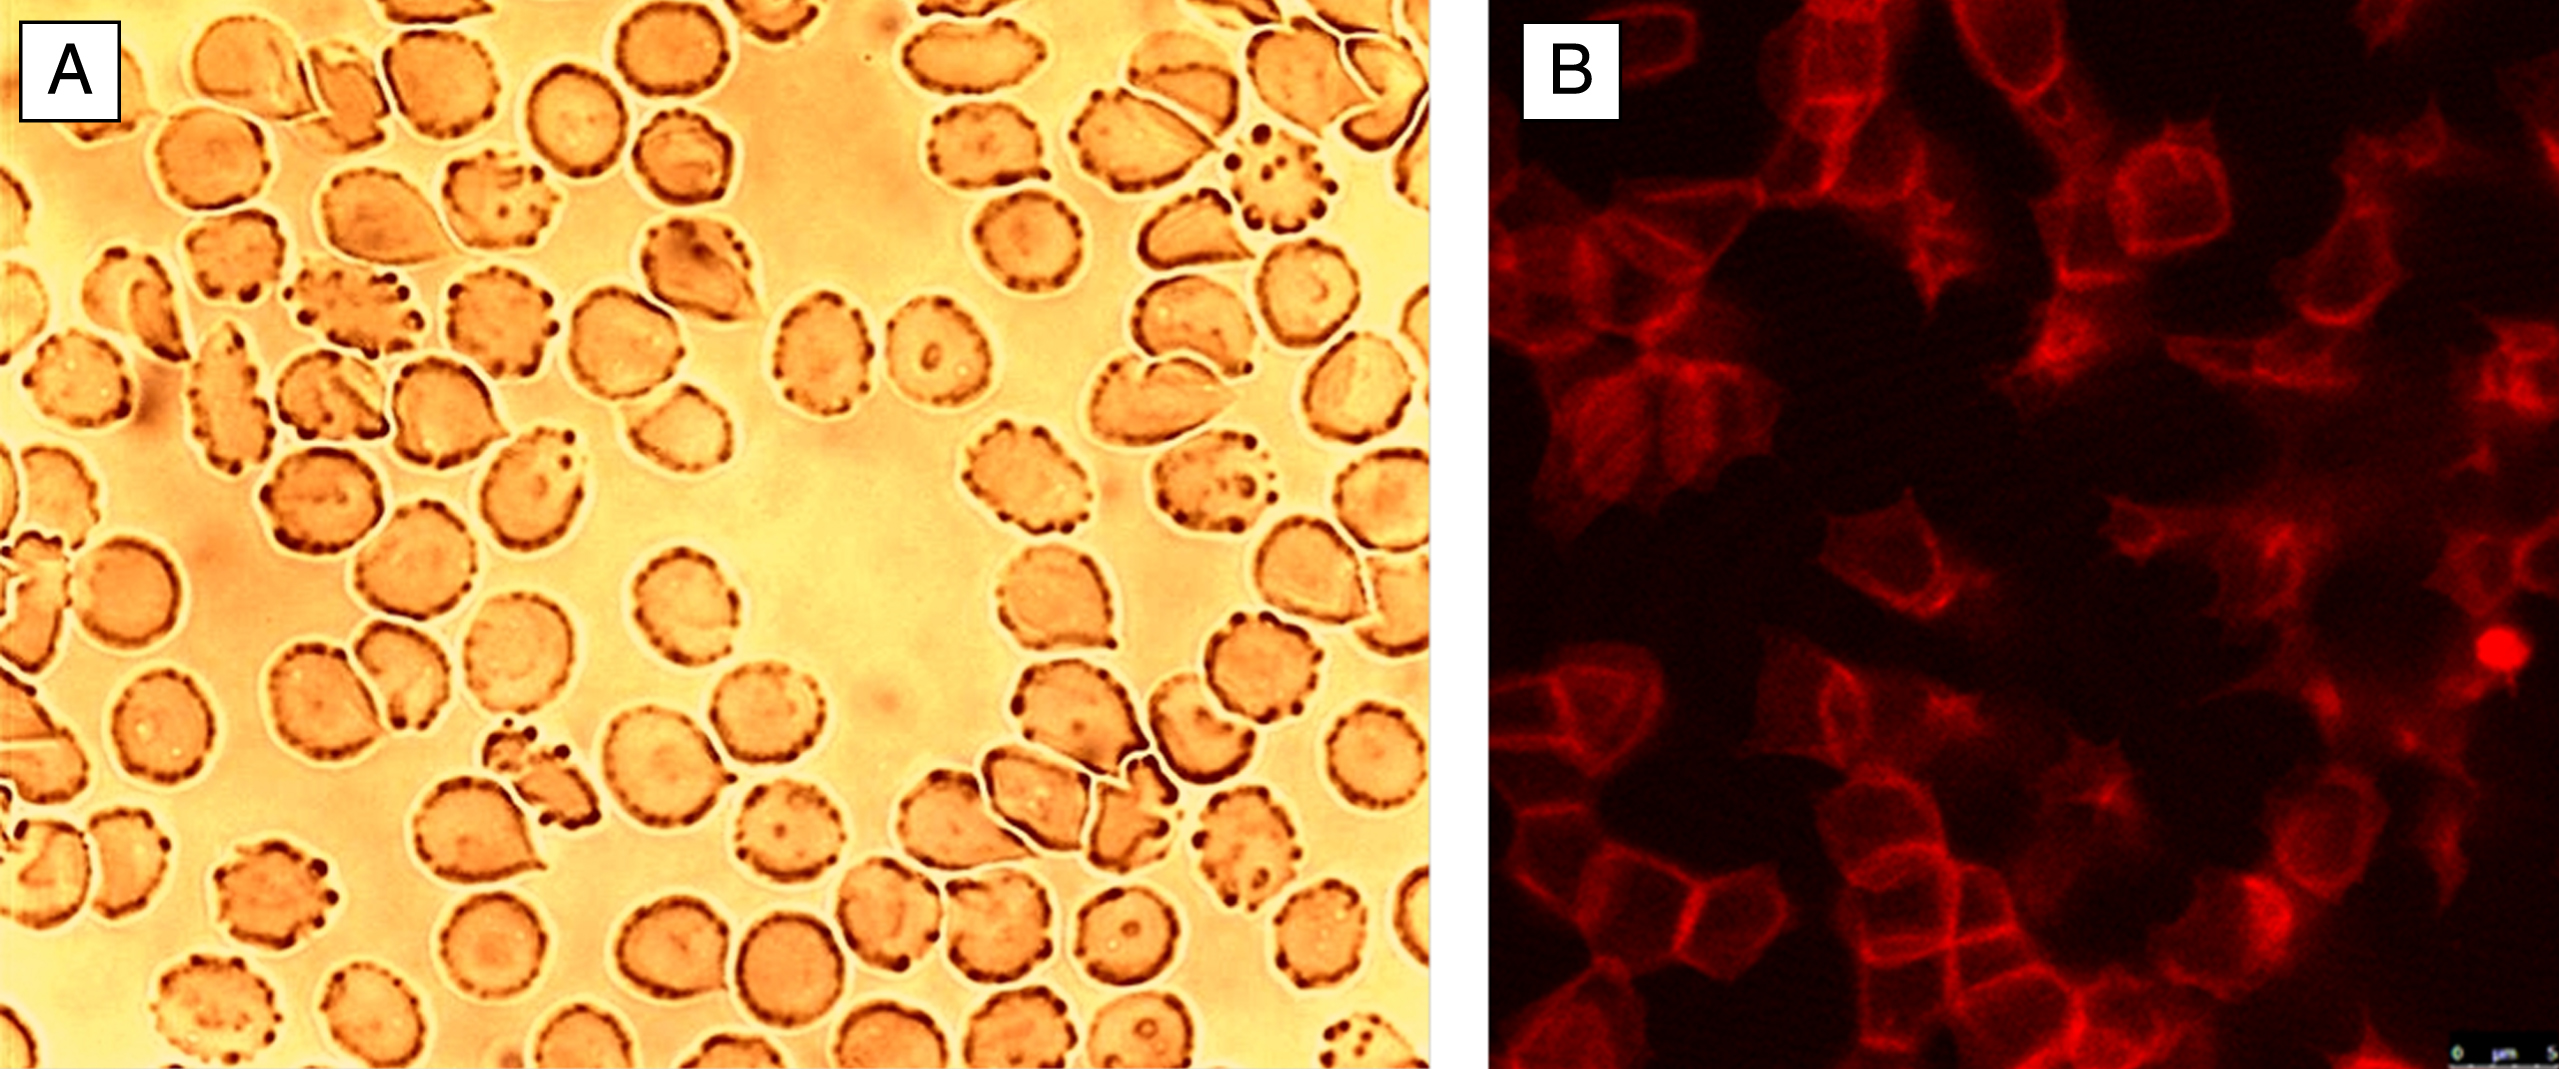 Echinocytes on a glass cover slip in autologous plasma. A: light microscopy, B: actin stained (phalloidin-rhodamine) erythrocytes visualized with laser scanning microscope.